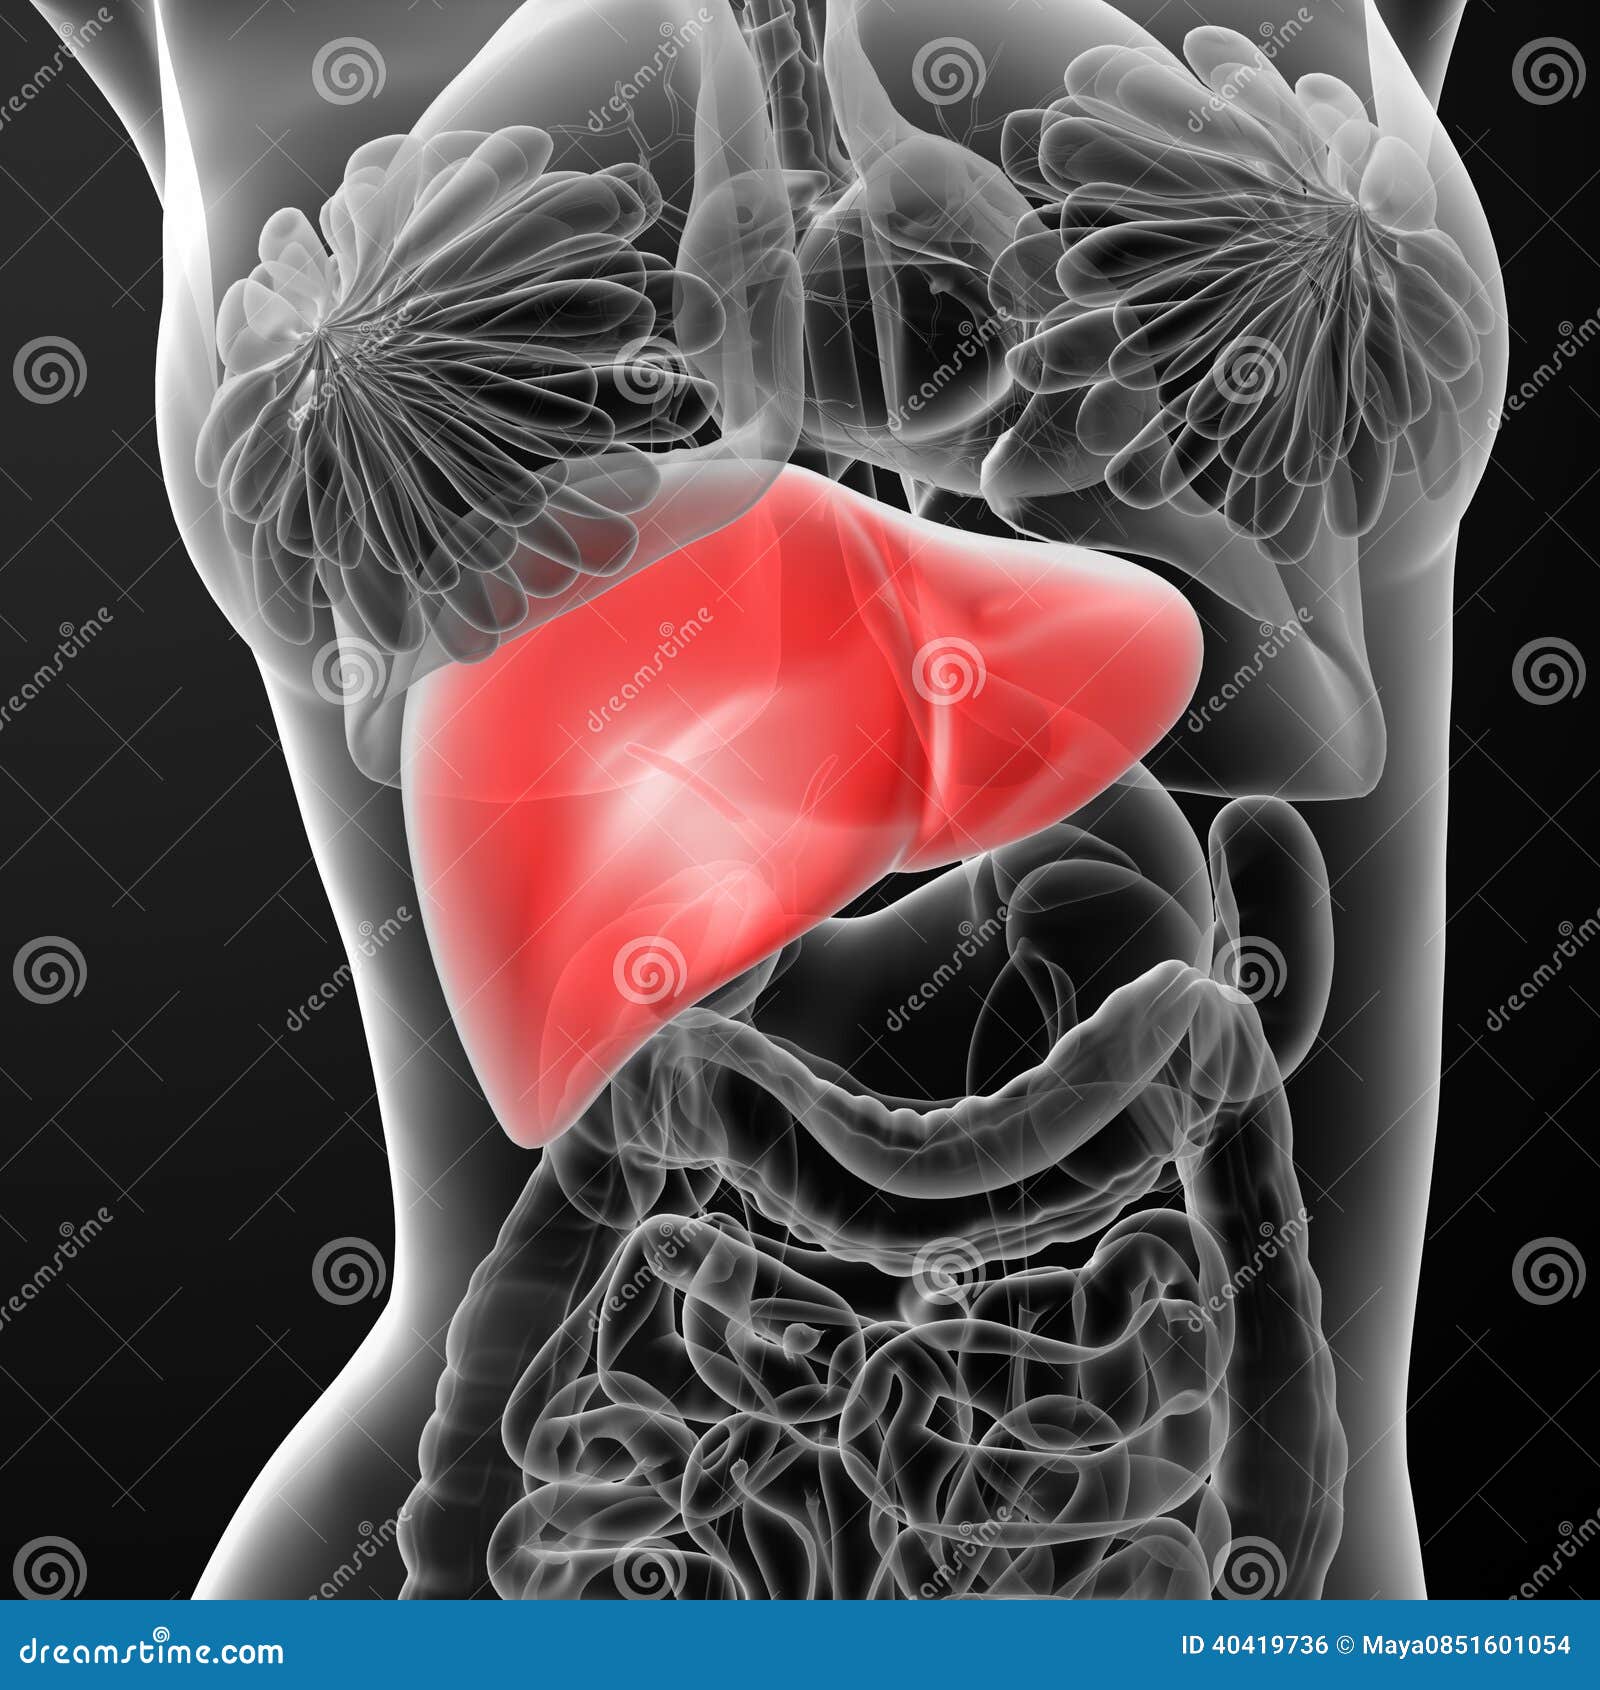 Liver stock illustration. Illustration of organs, anatomy - 40419736